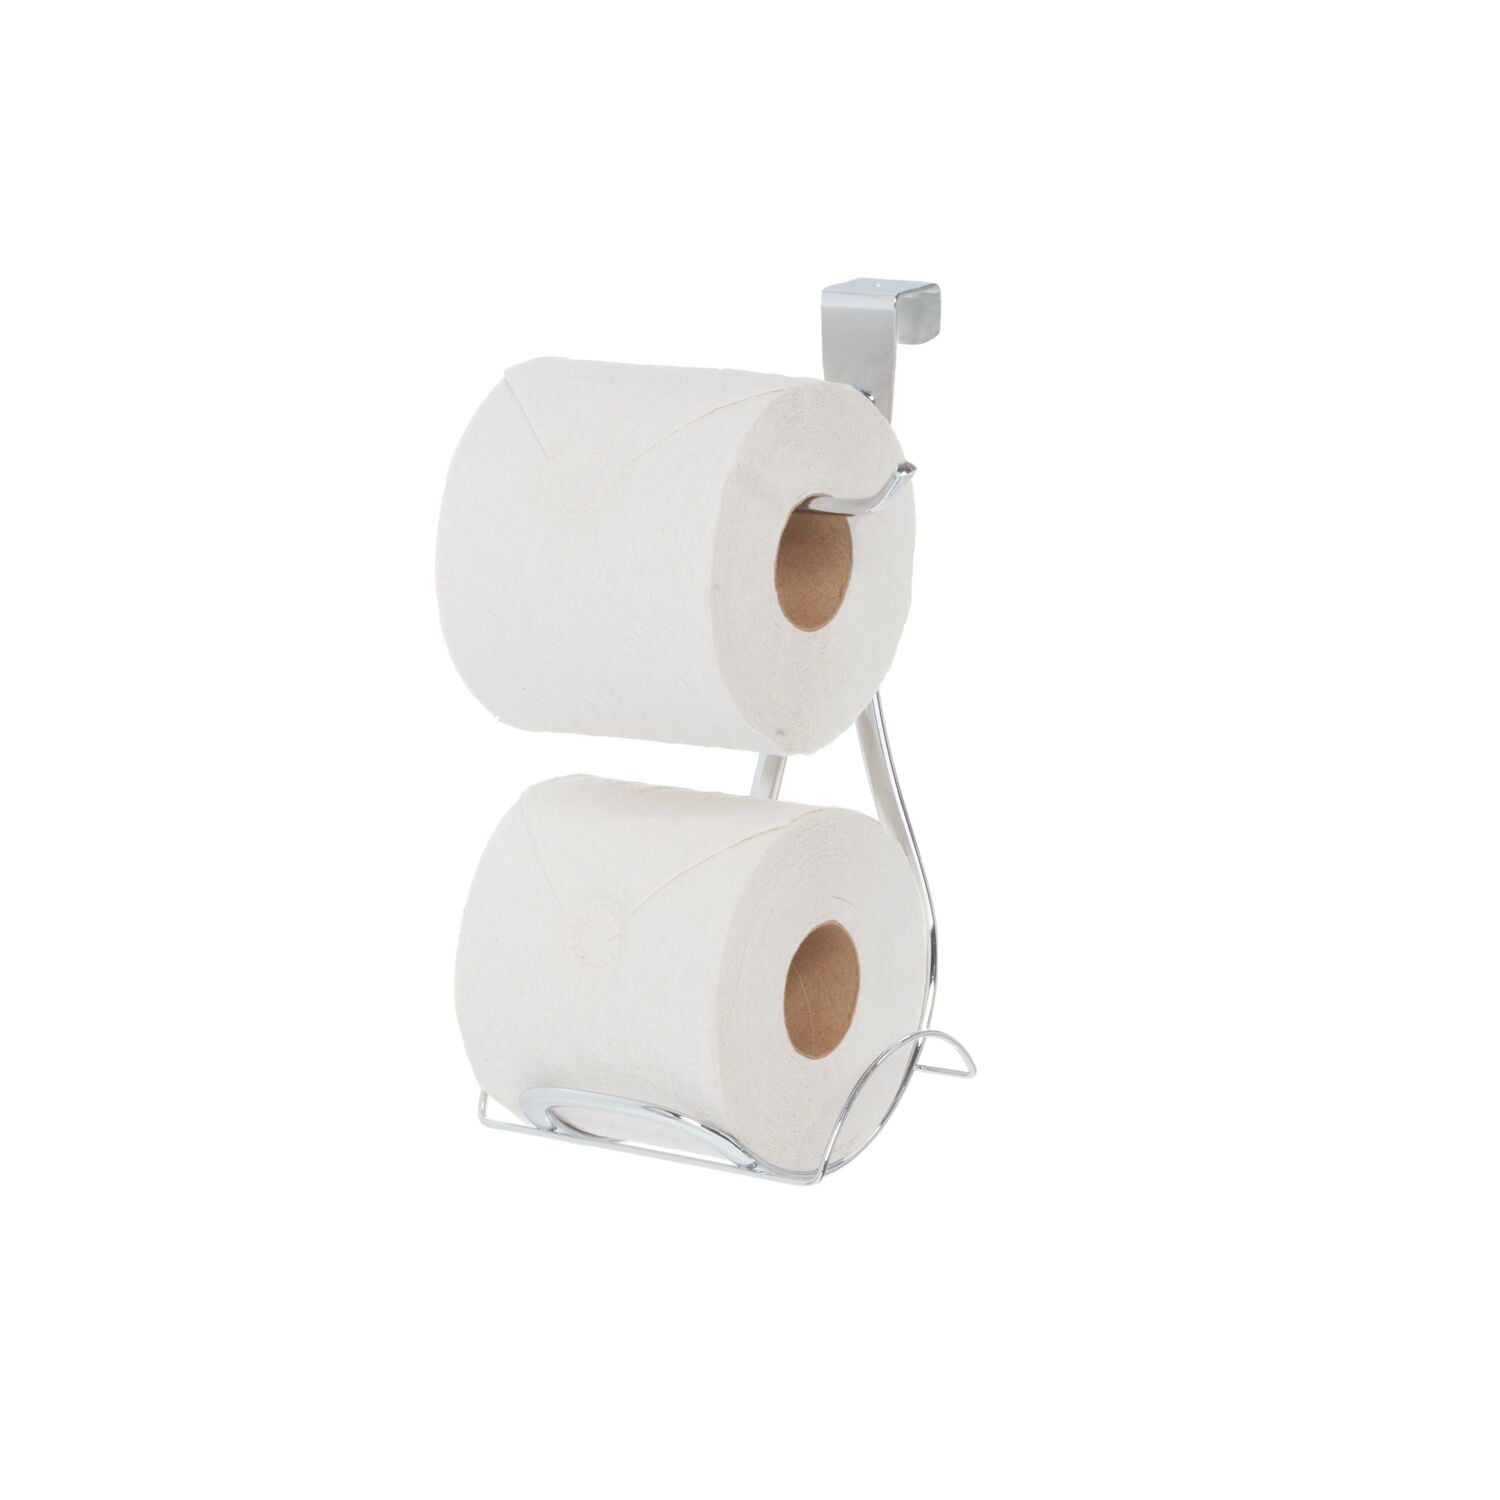 Toilet Paper Holder r, Over The Tank Two Slot Tissue Organizer